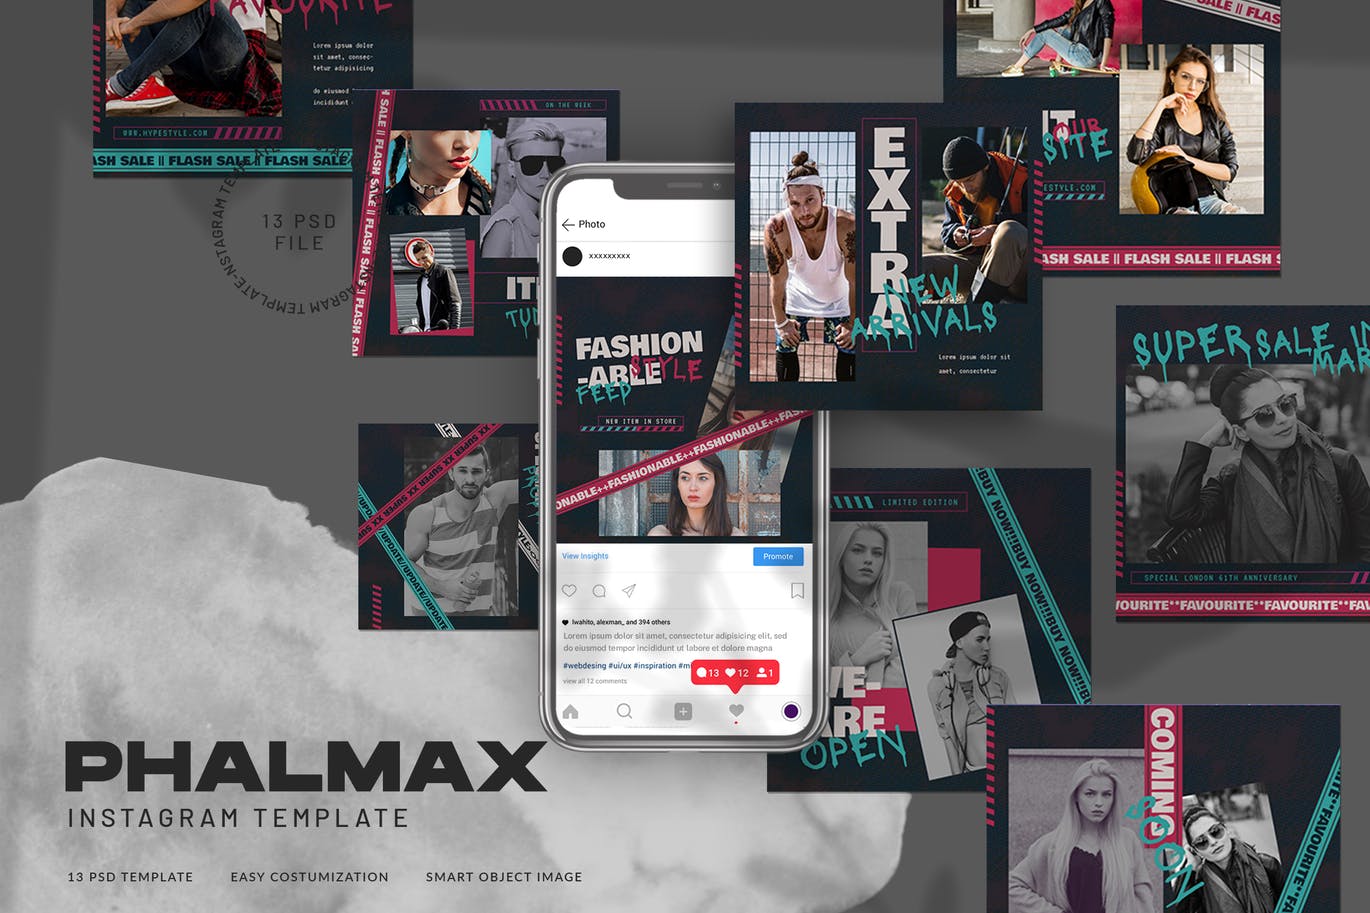 Phalmax Instagram Template for Fashion Streetwear